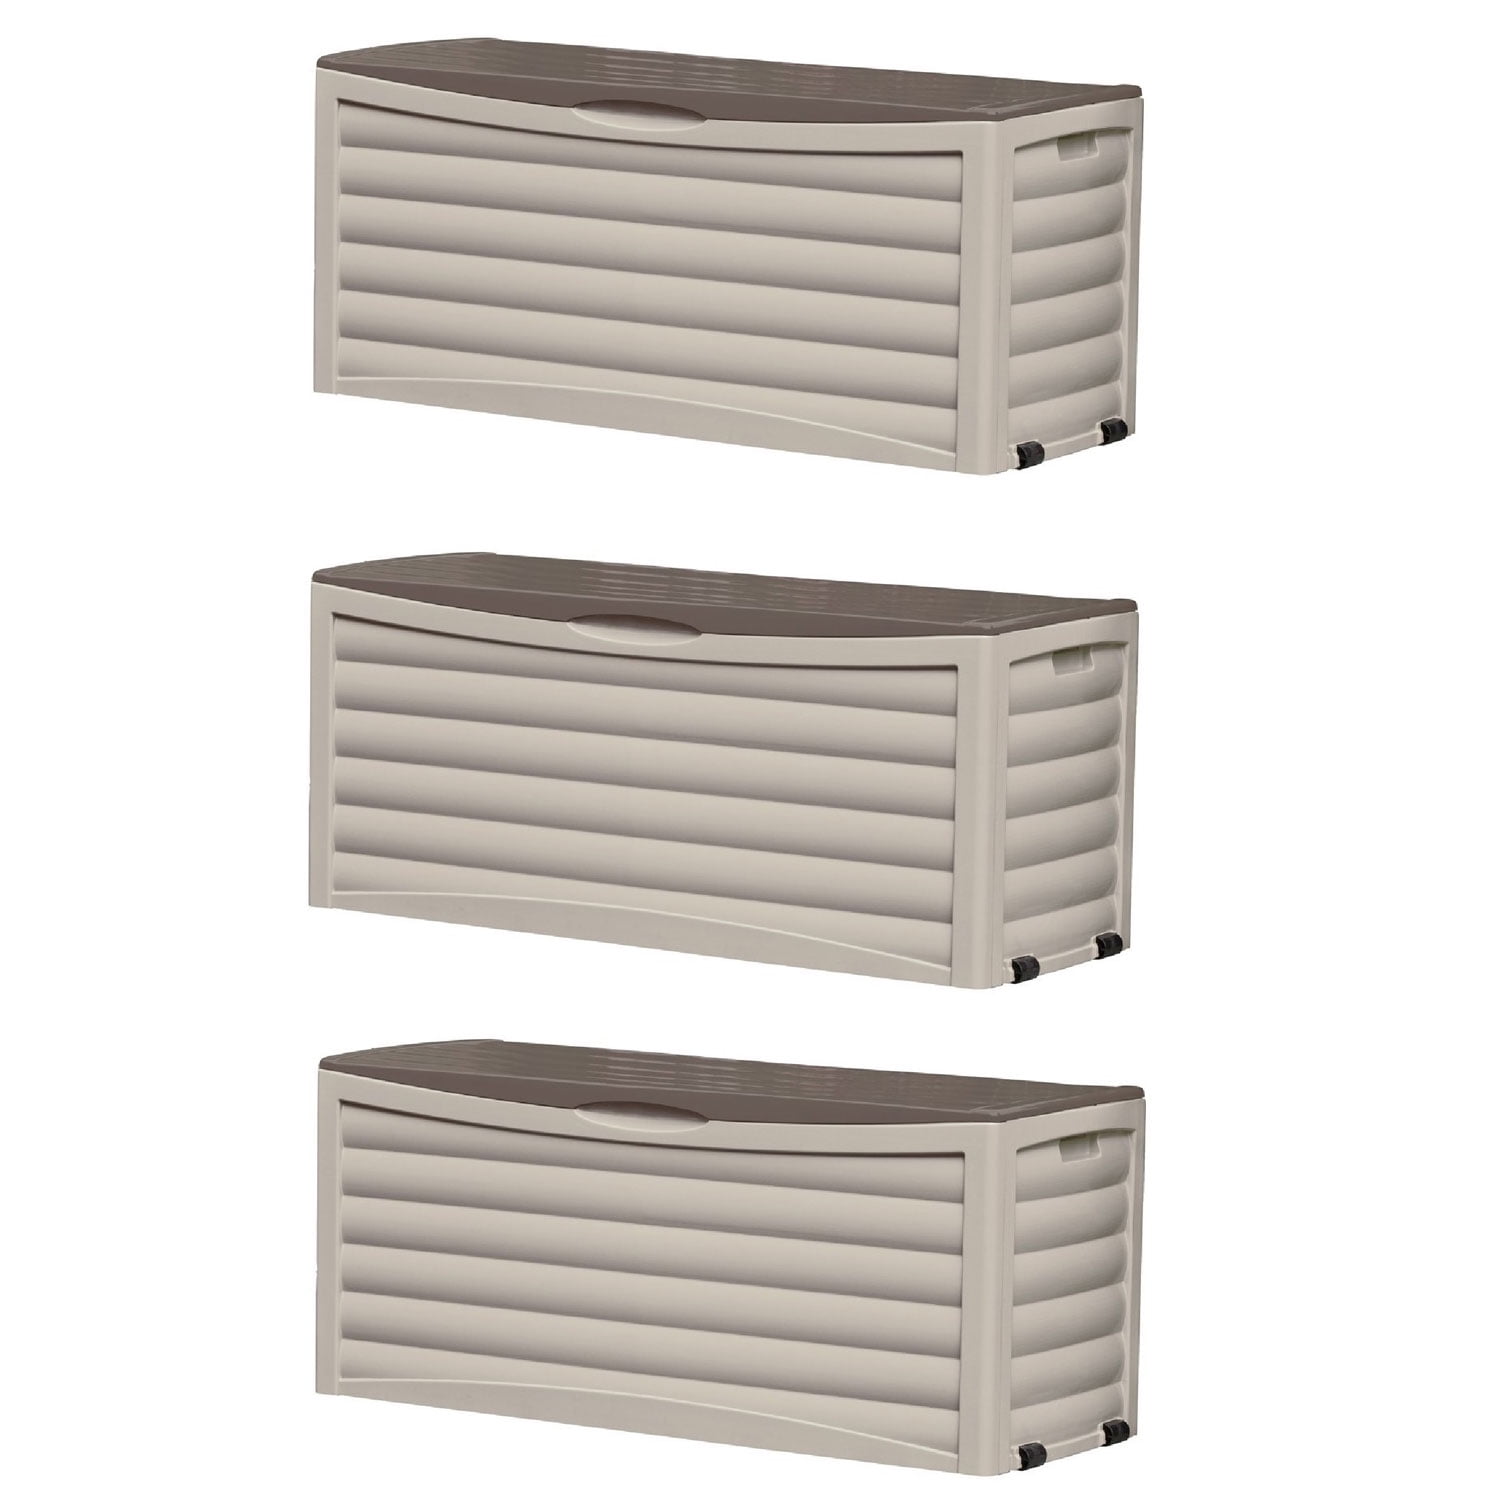 Mocha & Taupe Suncast 103 Gallon Capacity Resin Outdoor Patio Storage Deck Box 